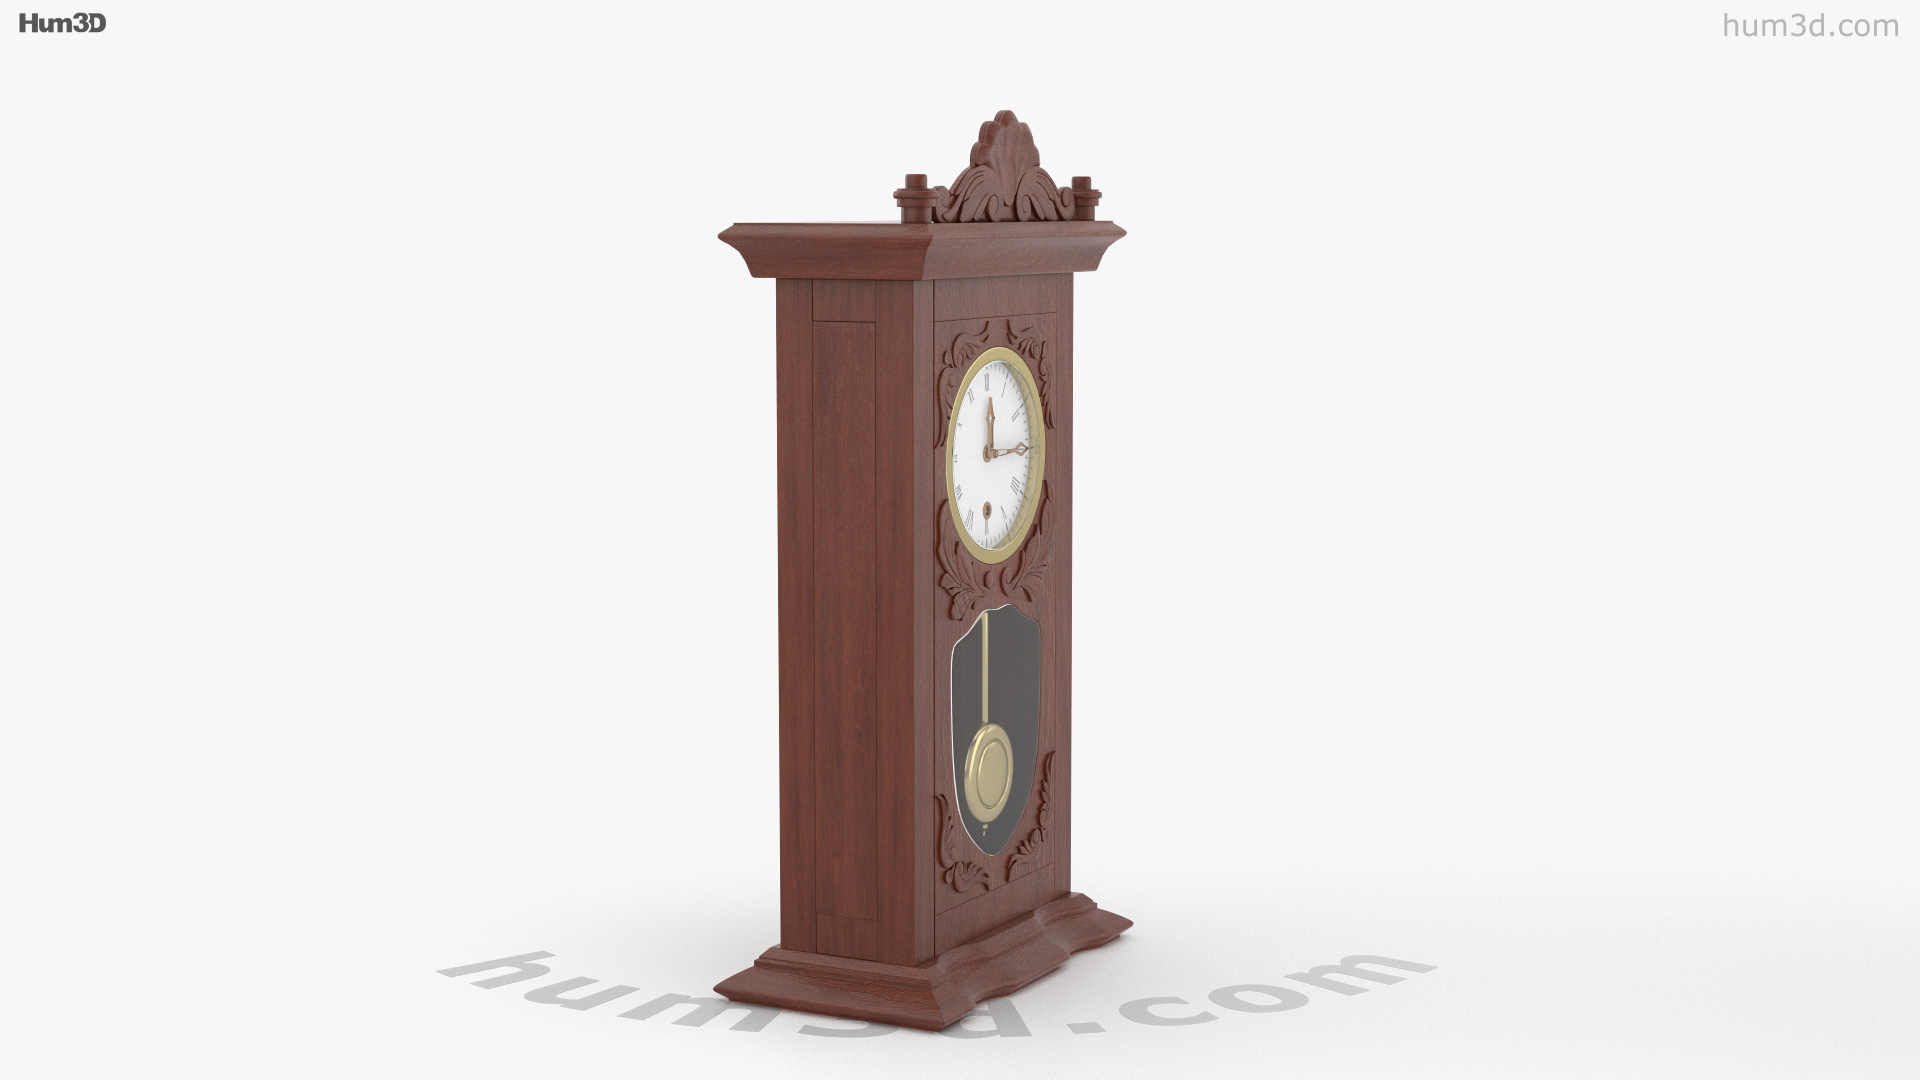 Pendulum Wall Clock Battery Operated - Hanging Grandfather Wall Clock with  Pendulum - Quiet Wood Pendulum Clock - Decorative Wooden Wall Clock for